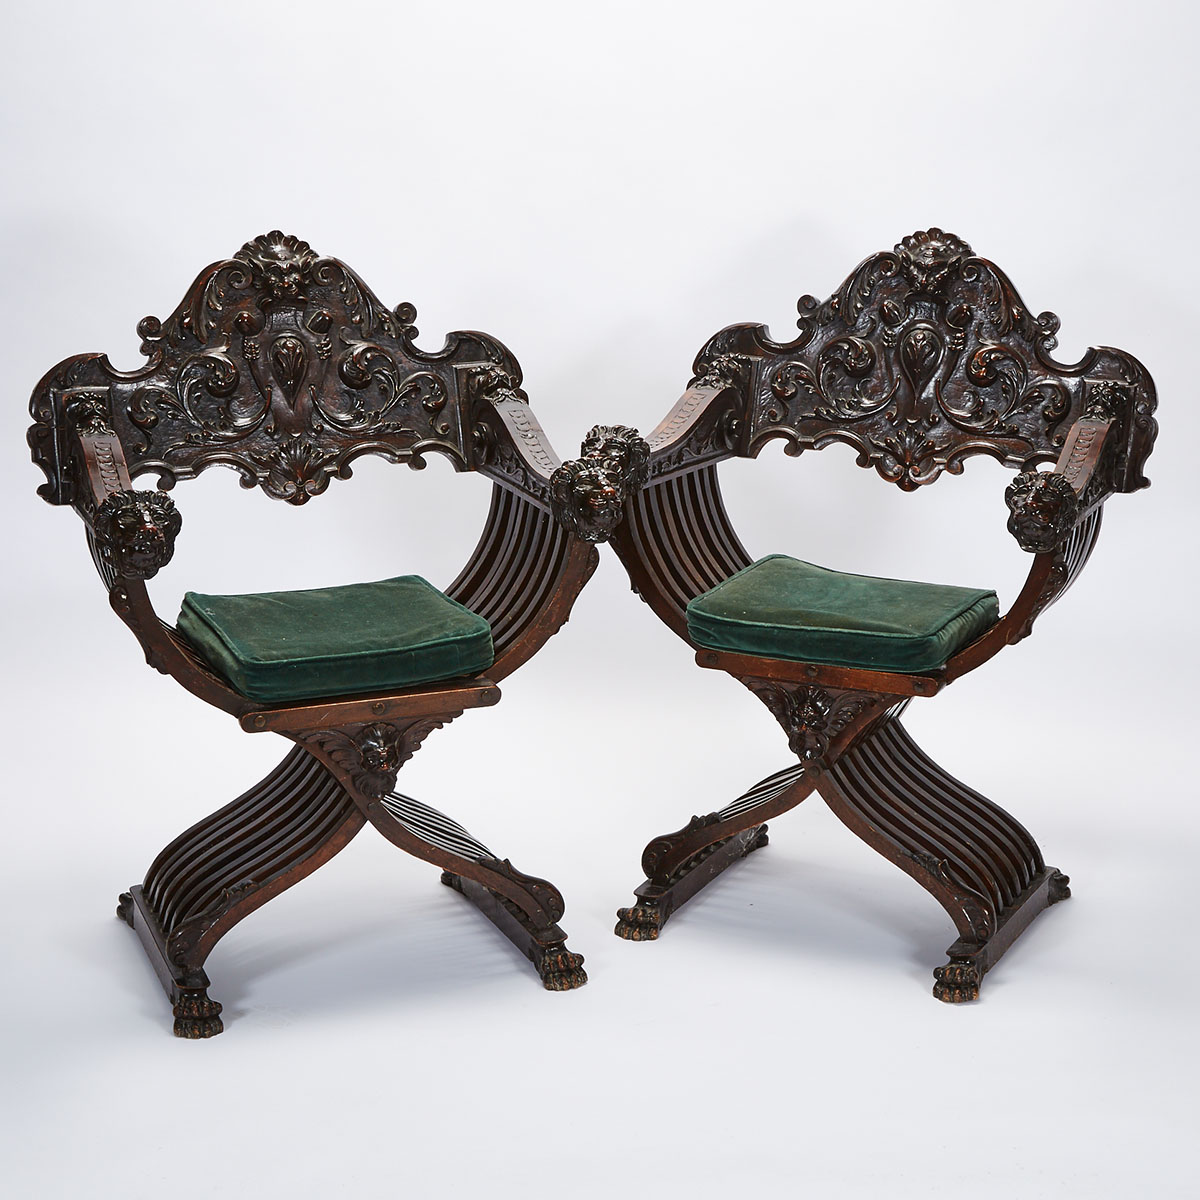 Pair of Italian Renaissance Style Carved Walnut Savonarola Chairs, 19th century